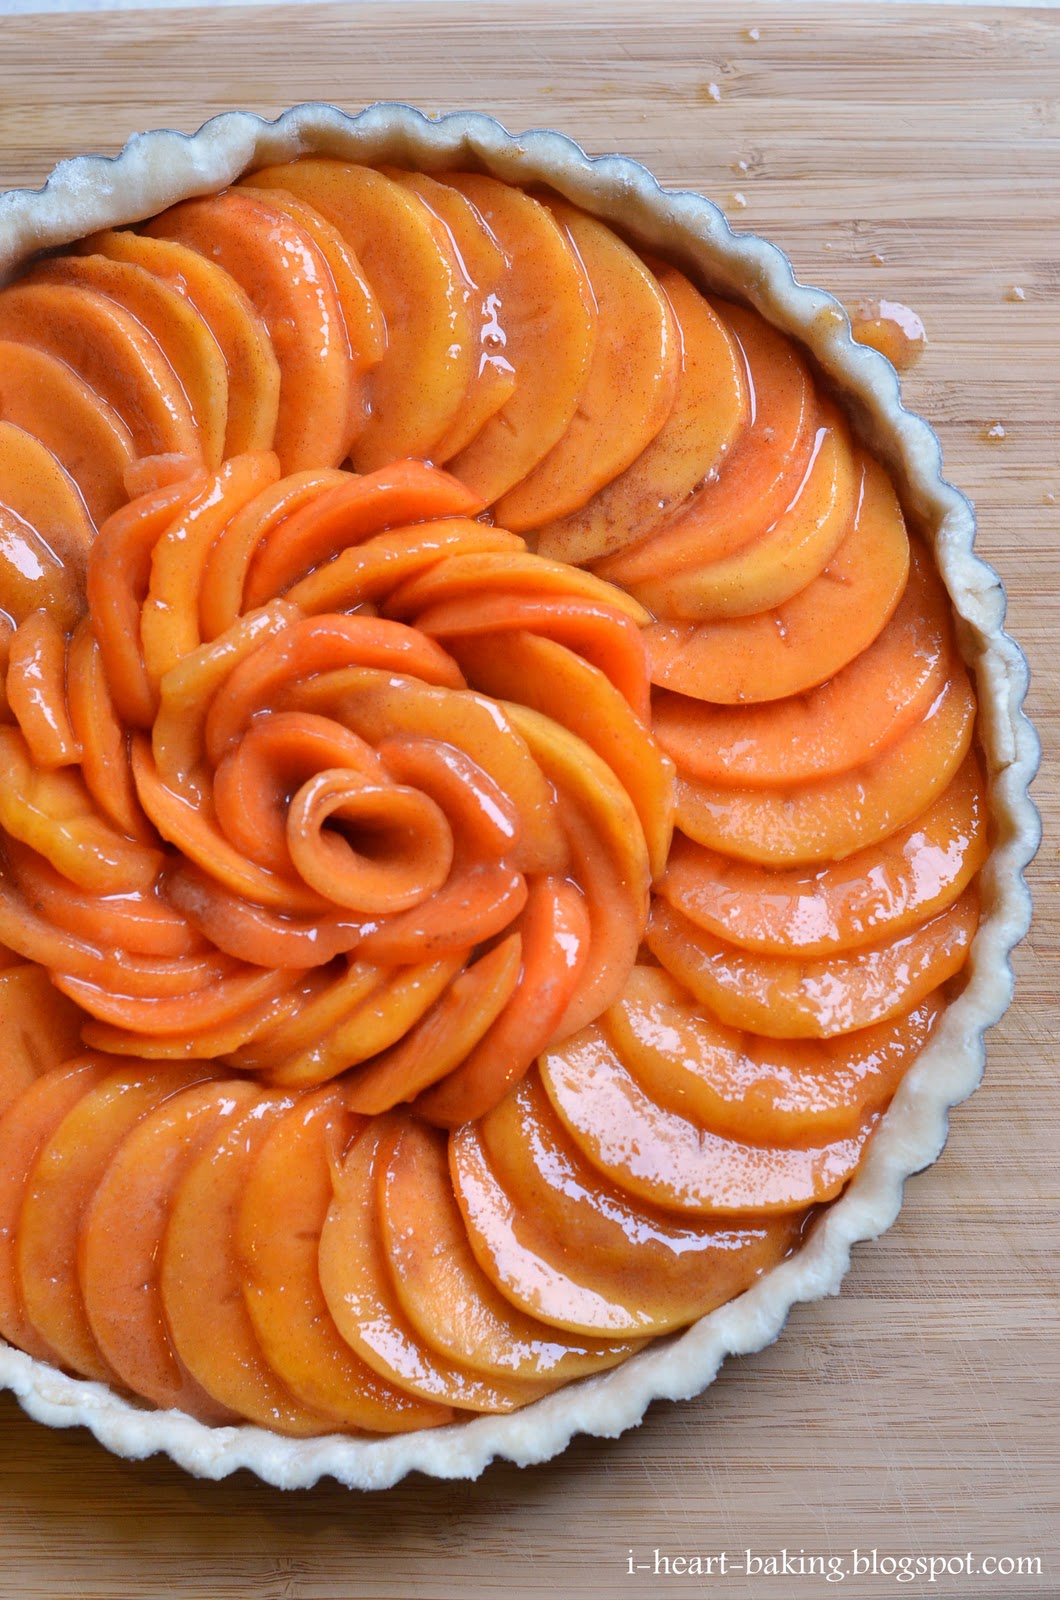 i heart baking!: thanksgiving persimmon tart